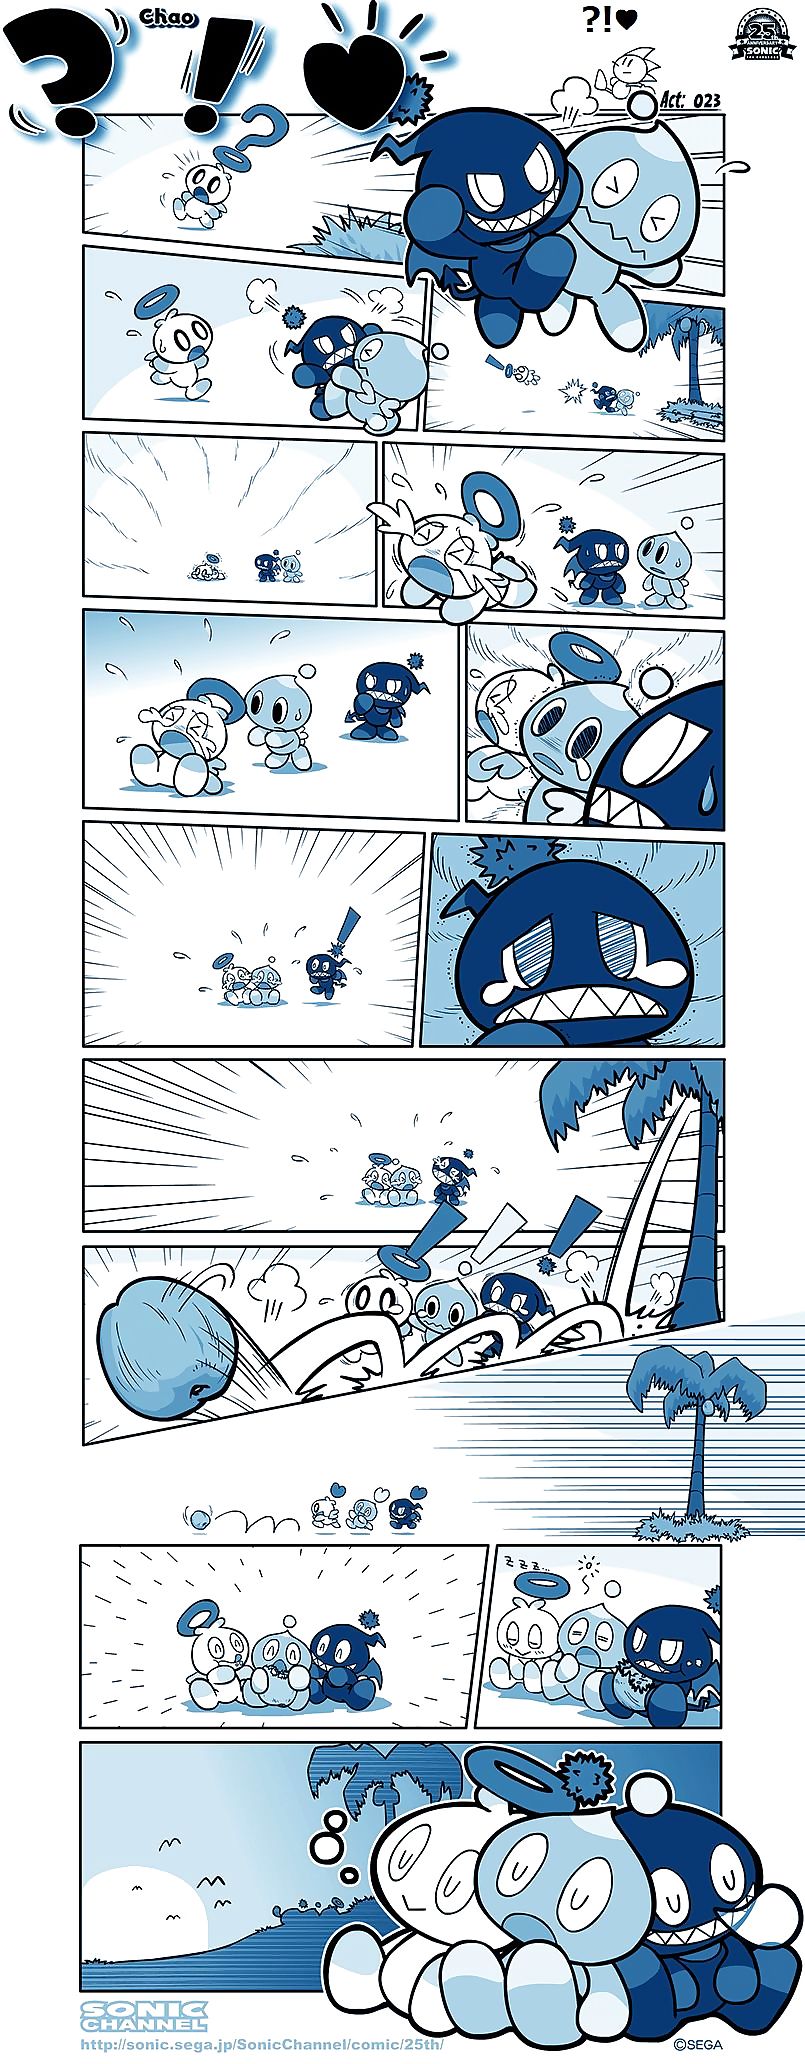 Sonic Comic - part 2